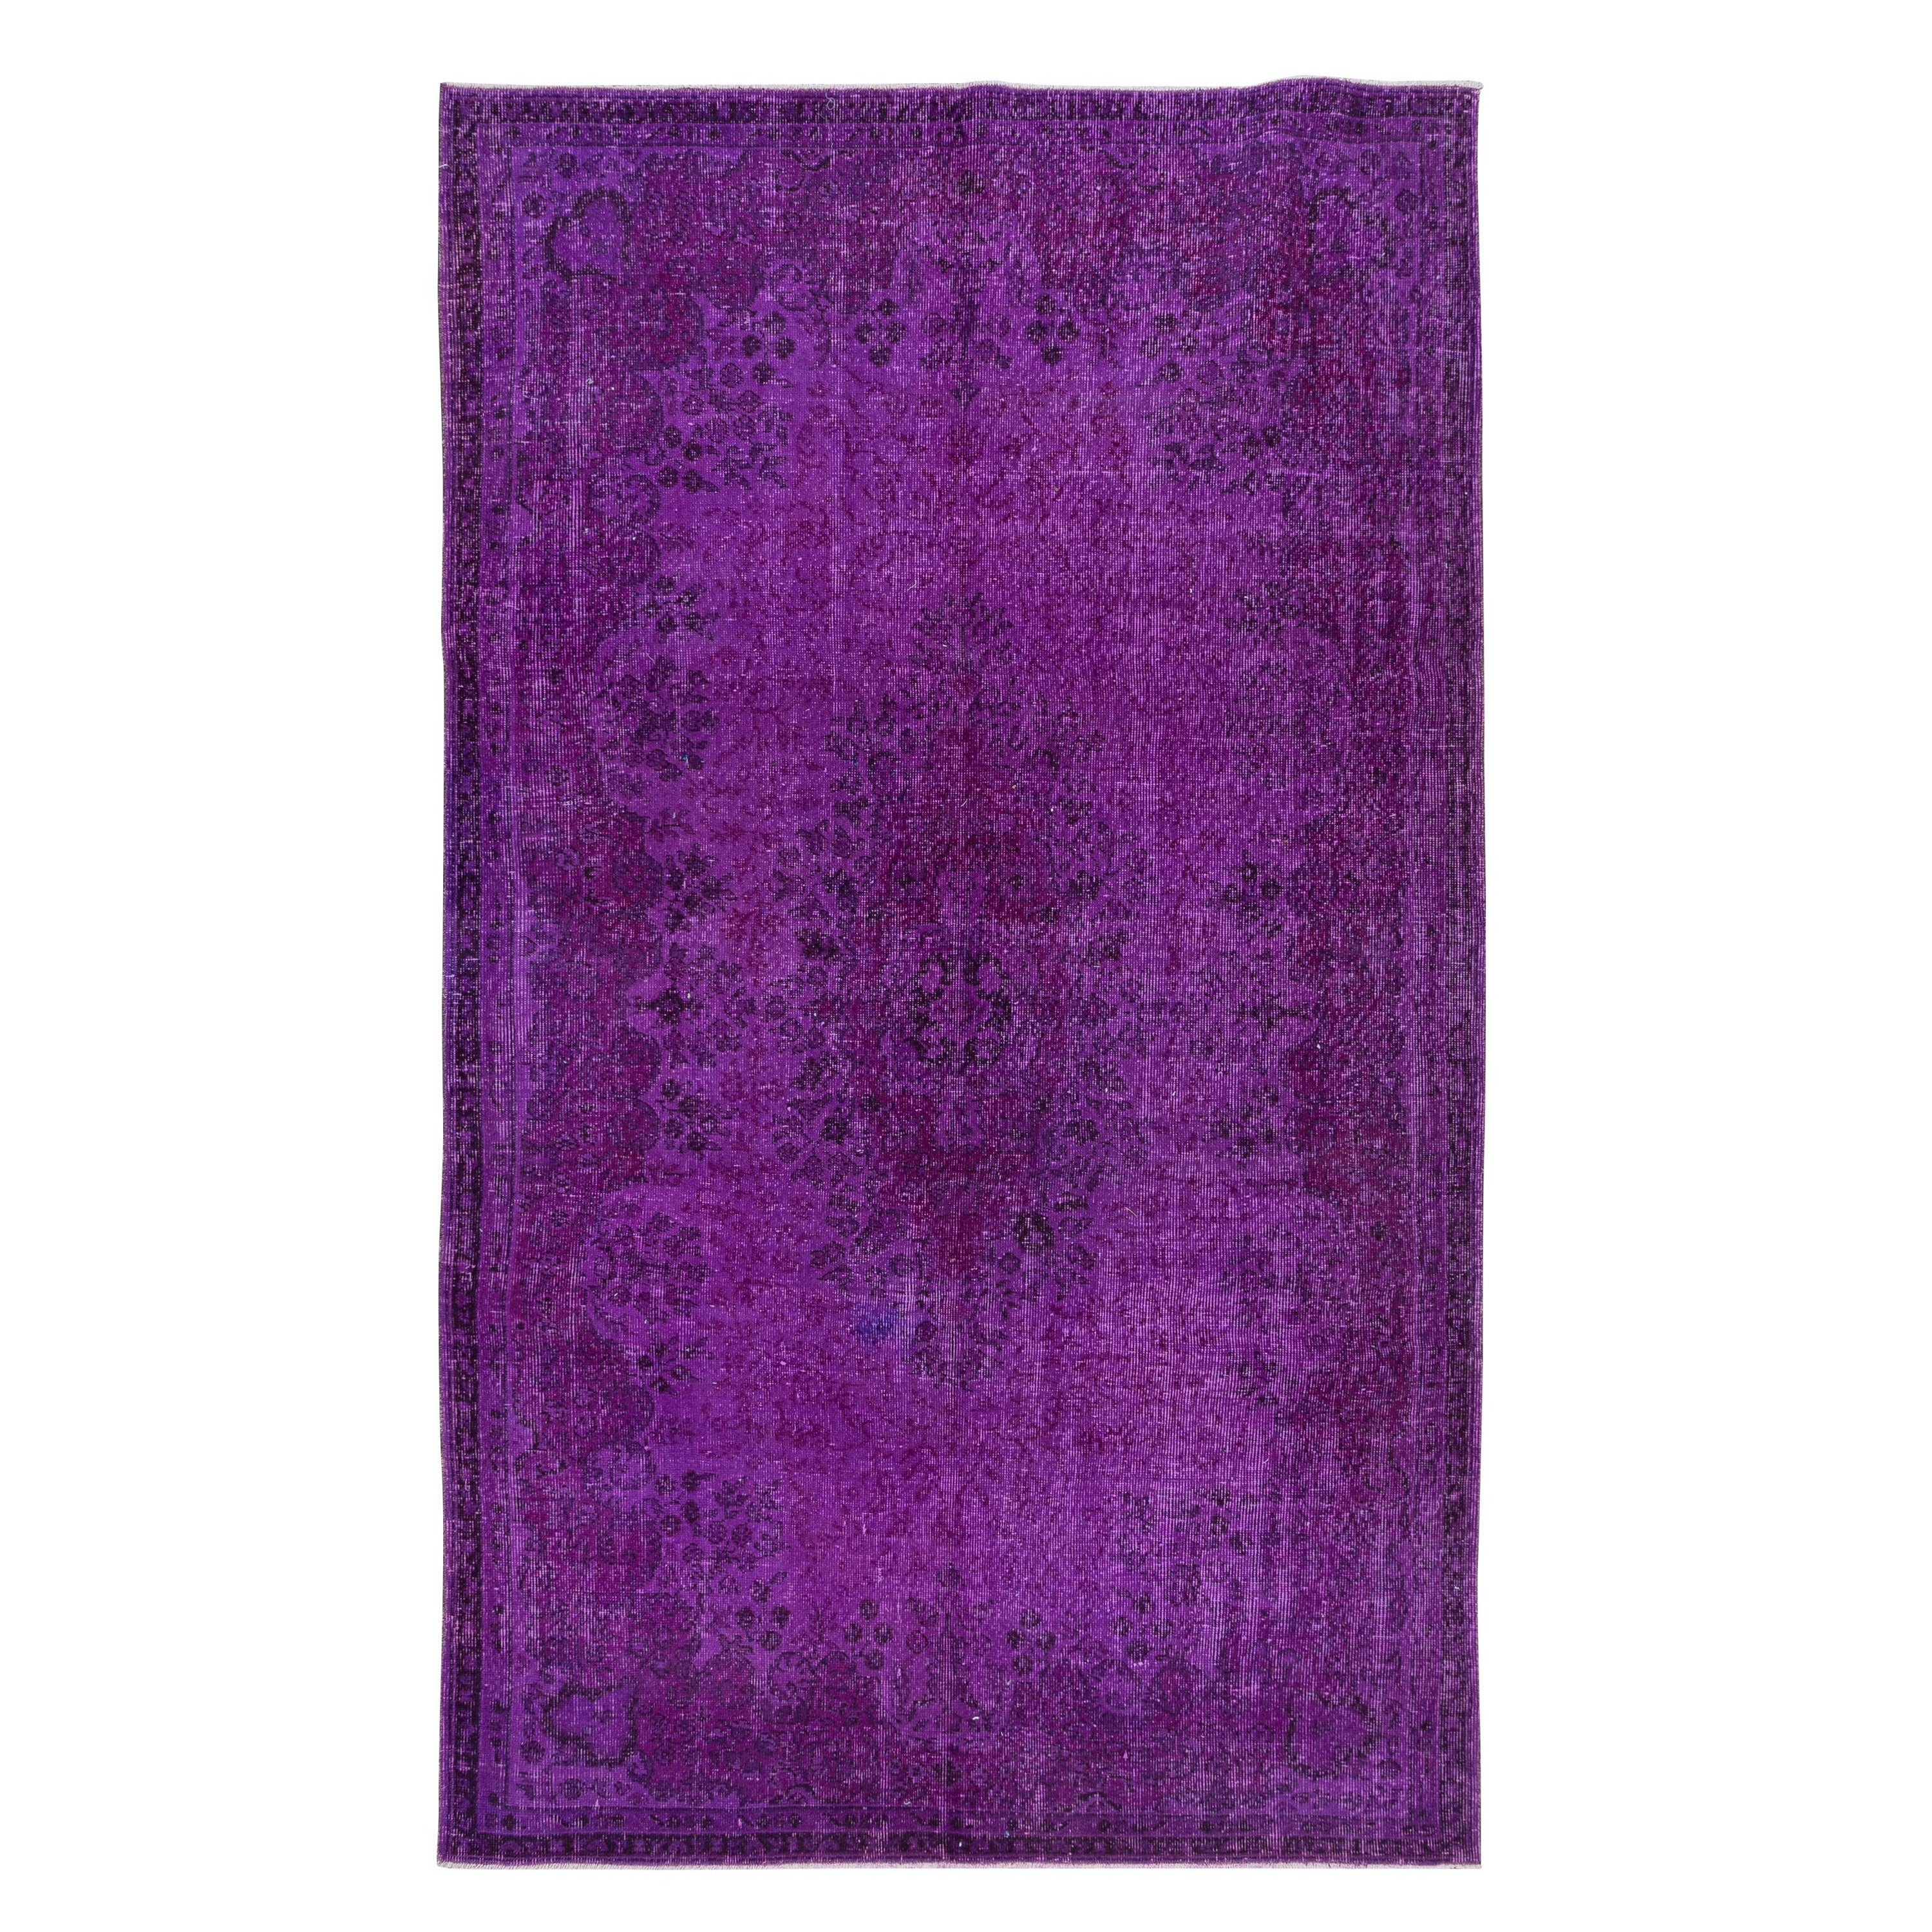 5.8x10 Ft Handmade Turkish Rug in Purple for Bedroom, Modern Living Room Carpet For Sale